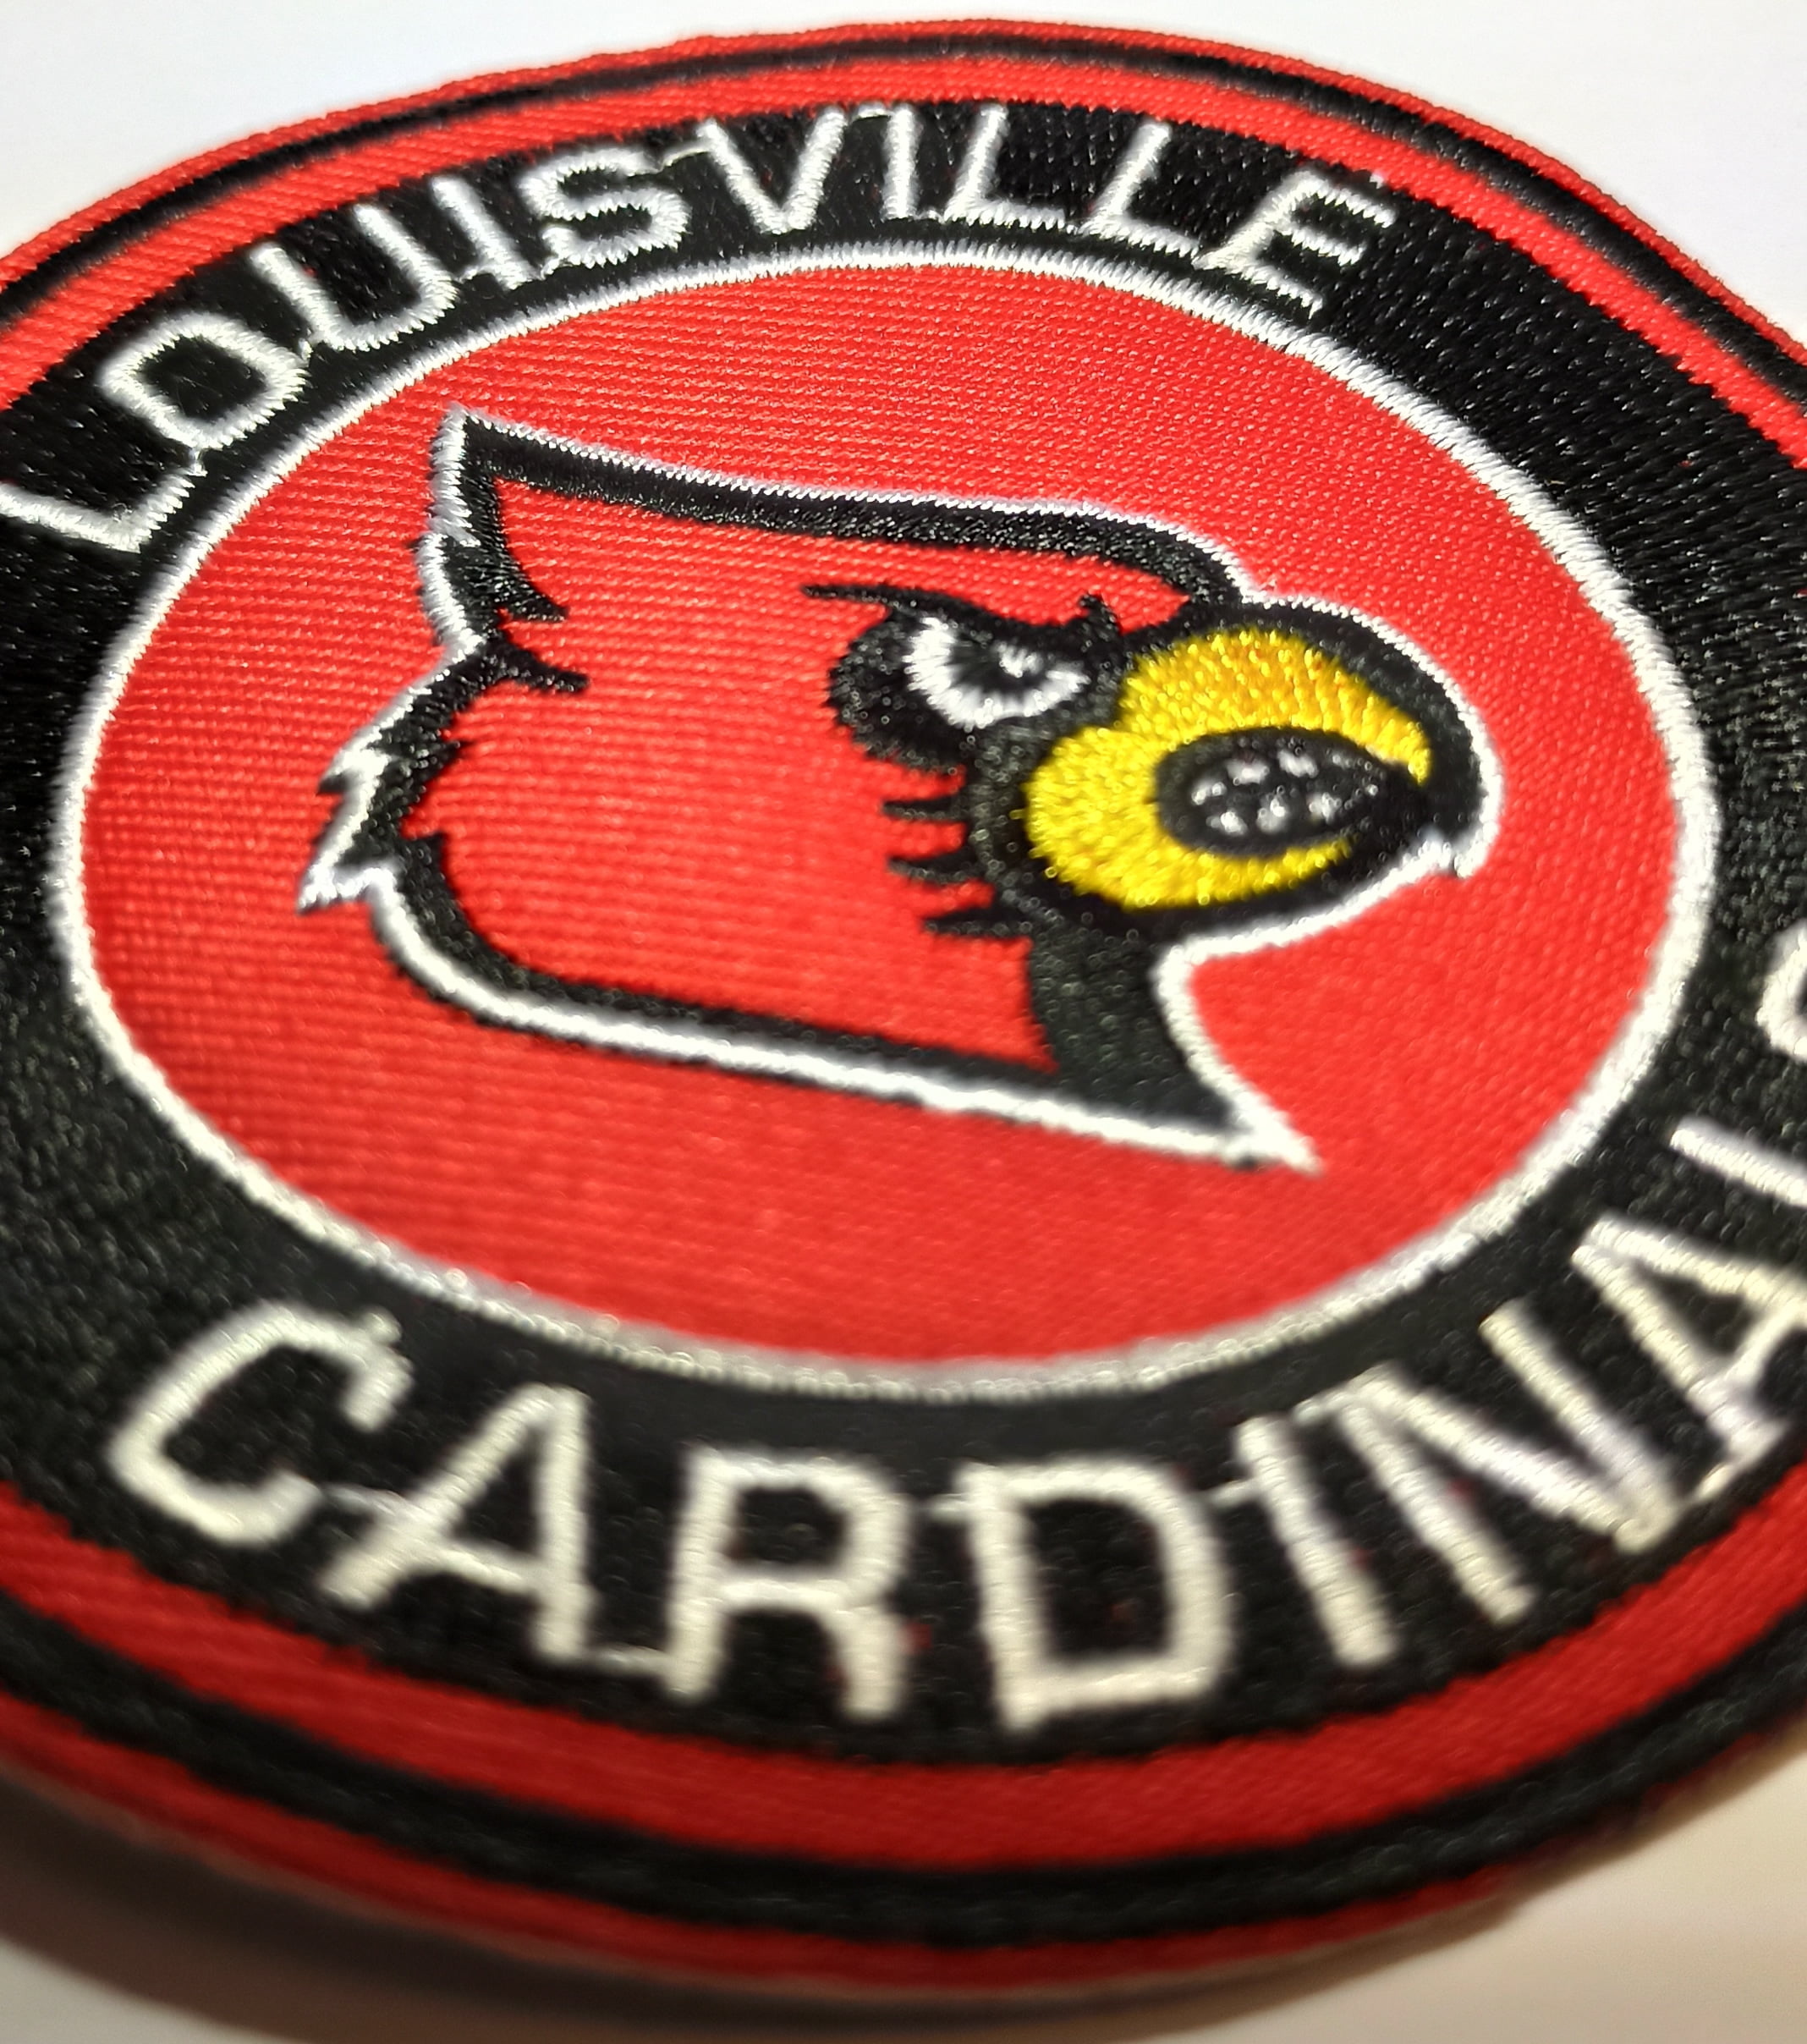 Louisville University Cardinals Vintage Mascot Iron-on Patch 